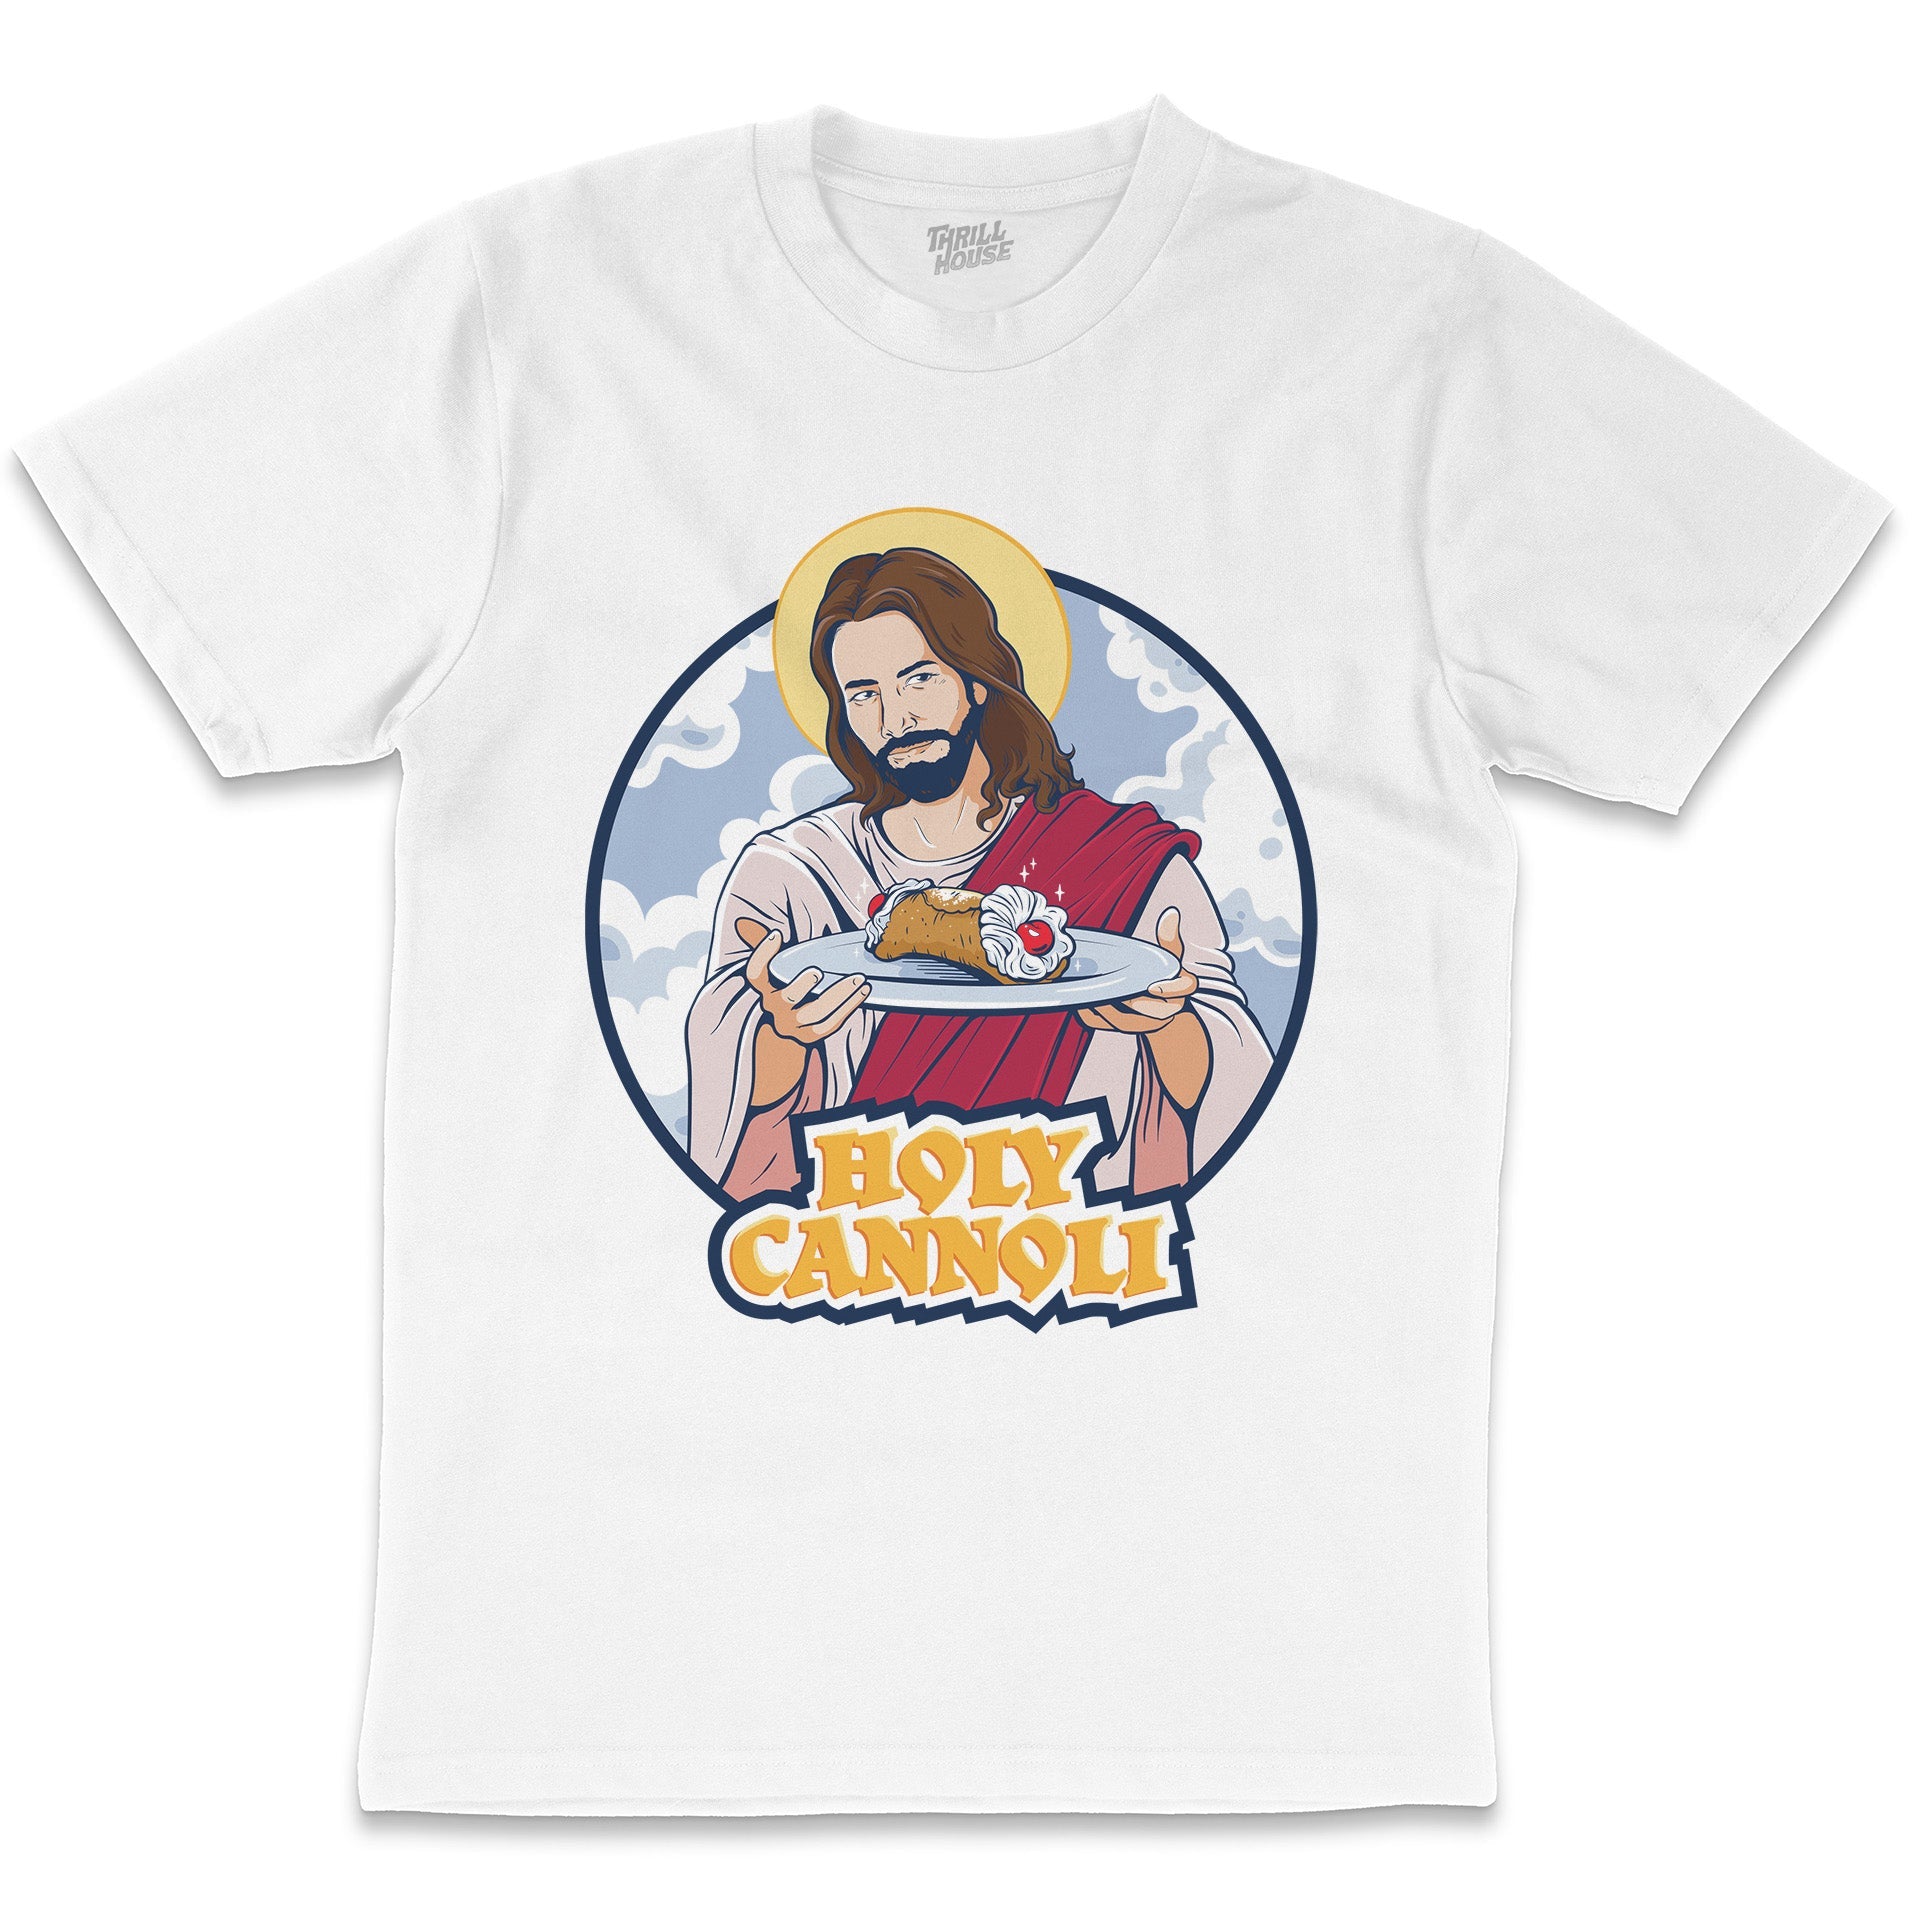 Holy Cannoli Funny Jesus Parody Religion Foodie Slogan Cotton T-Shirt